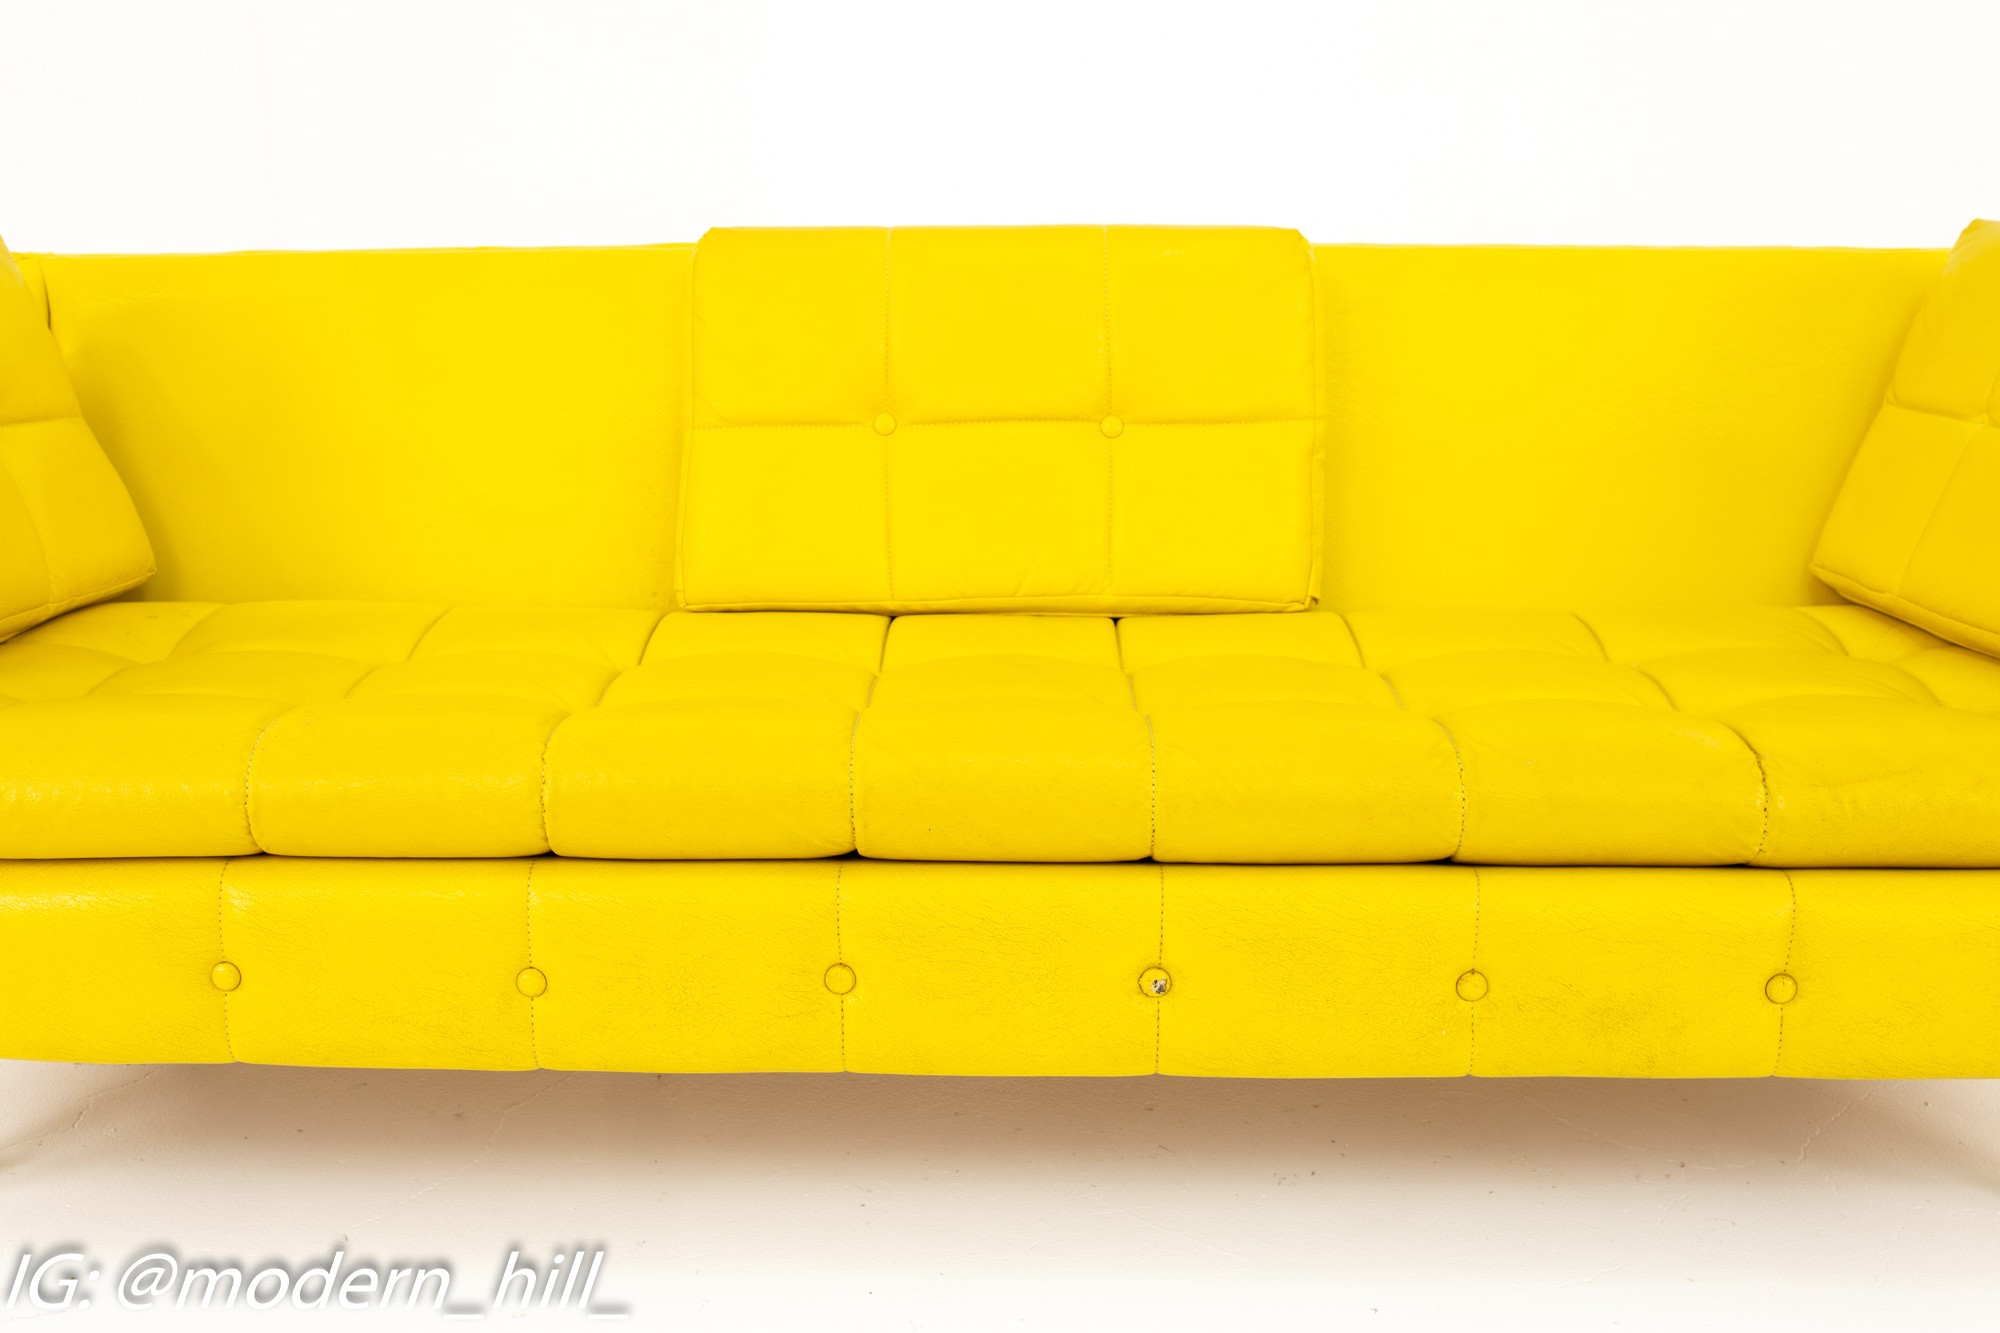 Milo Baughman Style Mid Century Tufted Canary Yellow Sofa